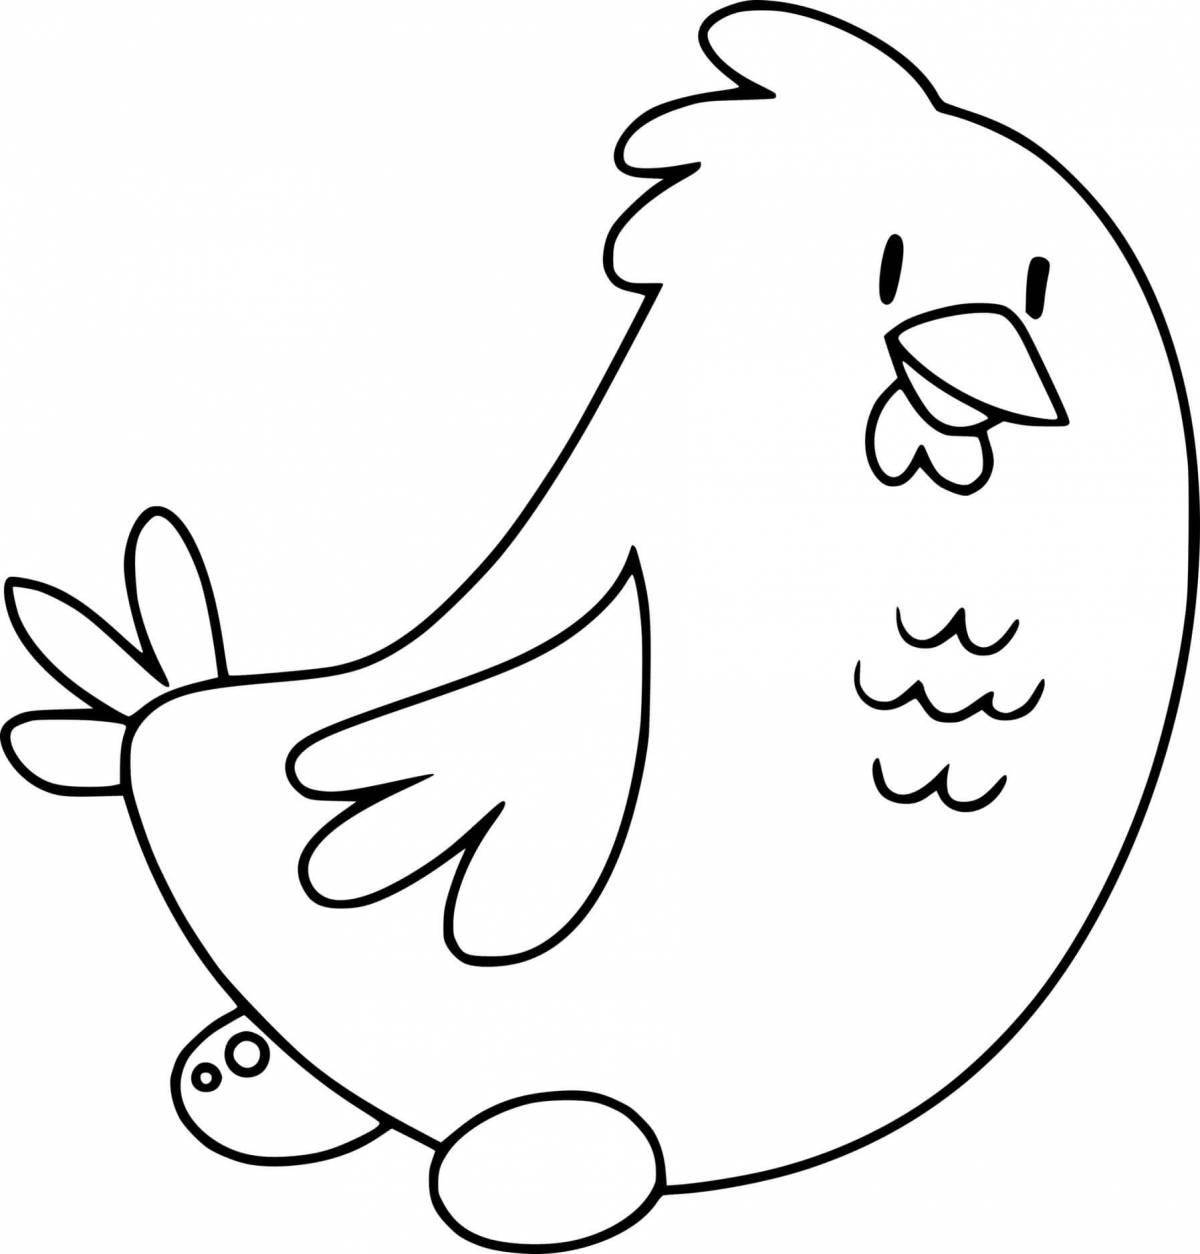 Joyful chicken gun e coloring page